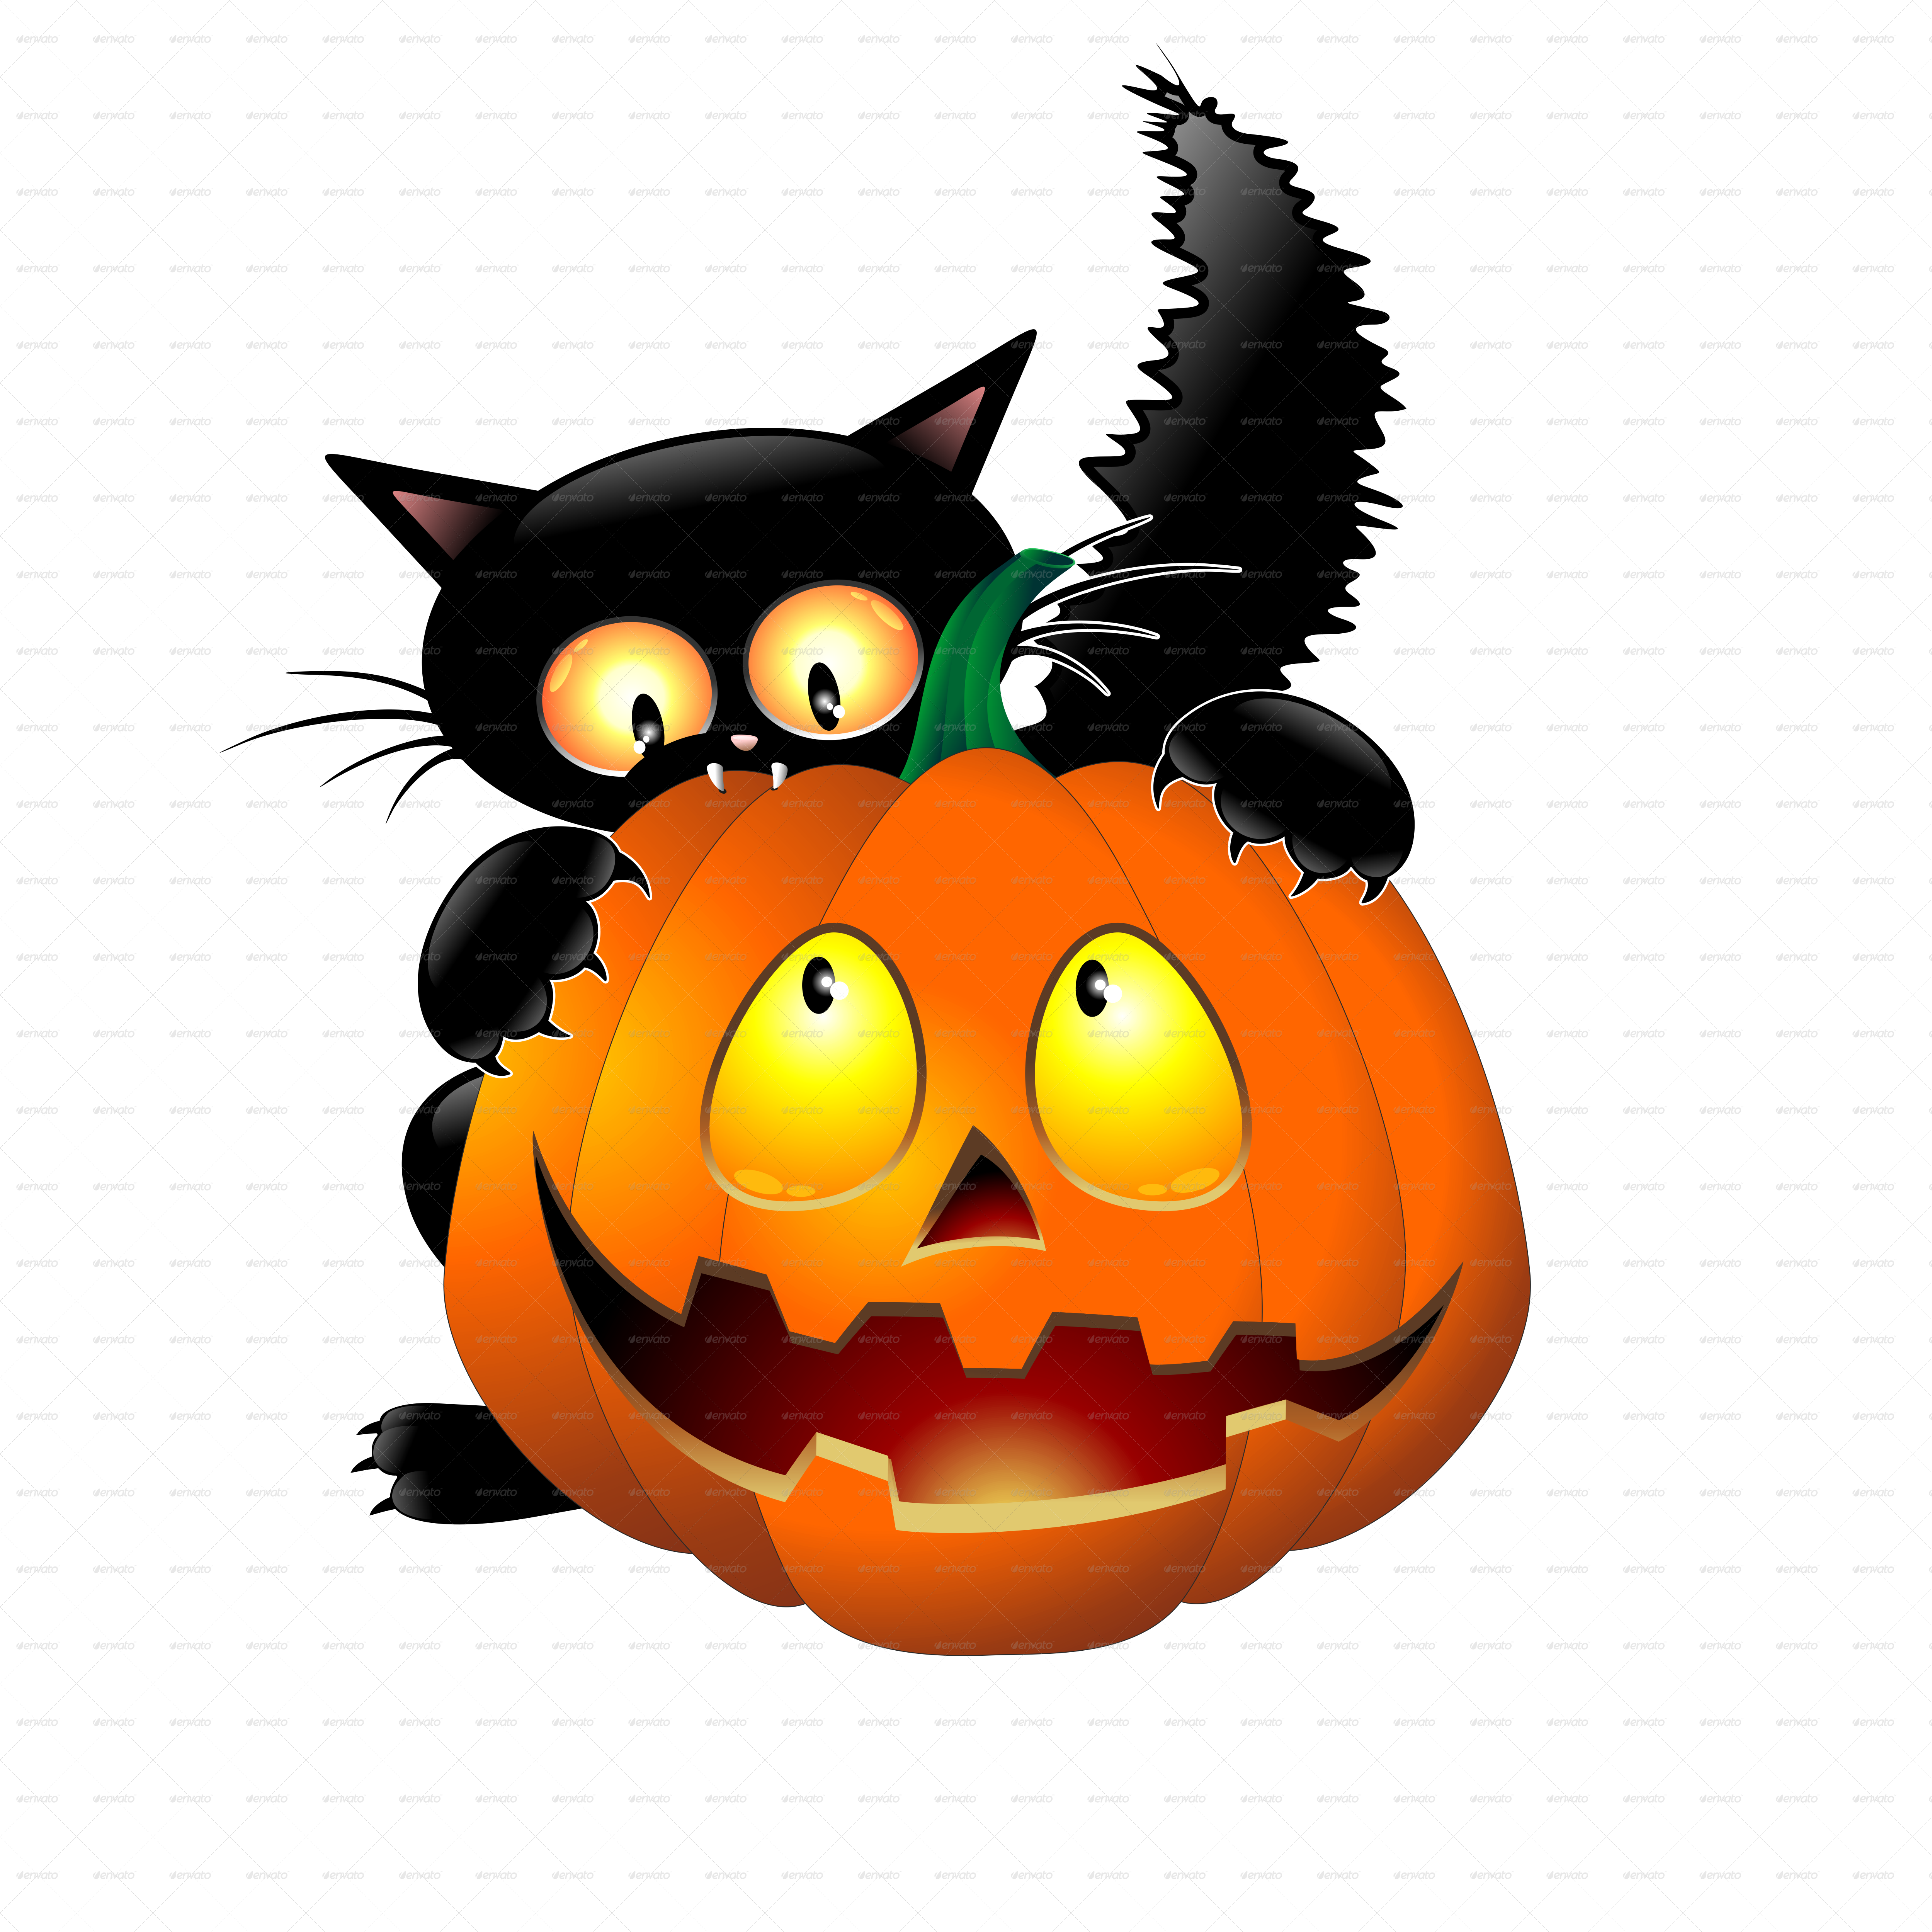 Black Catand Jack O Lantern Halloween PNG